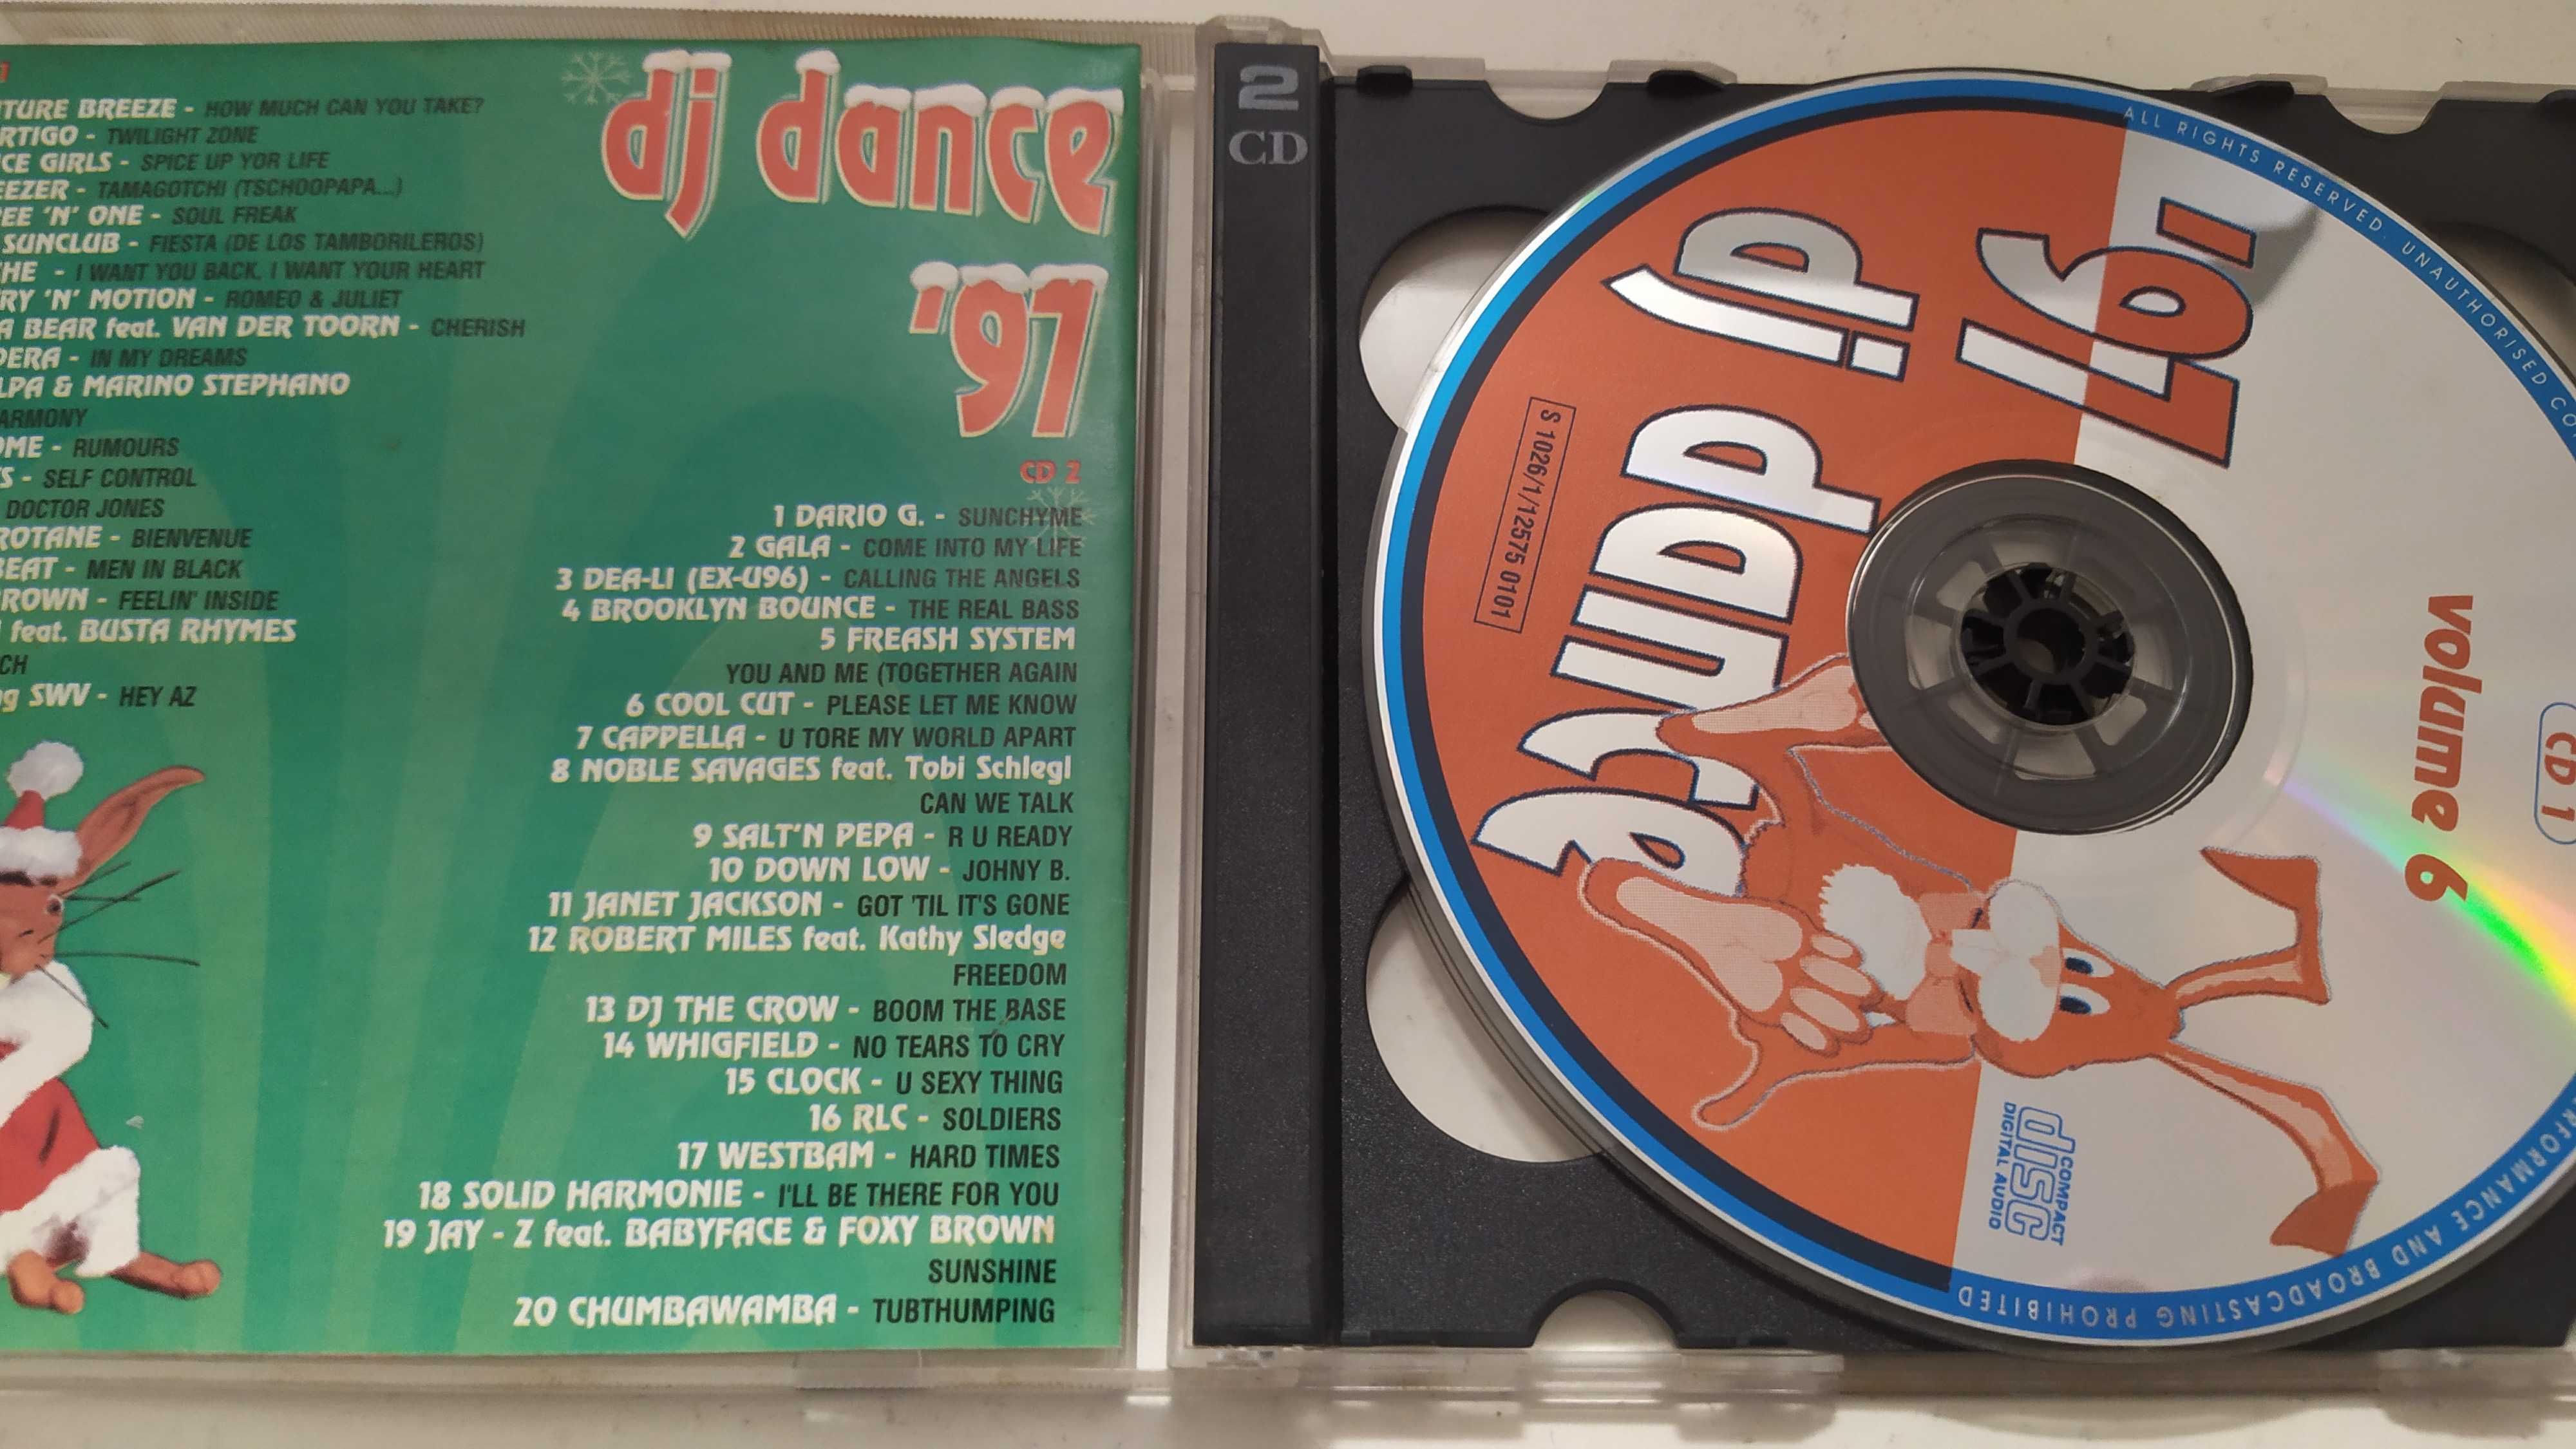 DJ Dance '97 Volume 6 Spice Girls Future Breeze Jay Z Chumbawamba  RLC